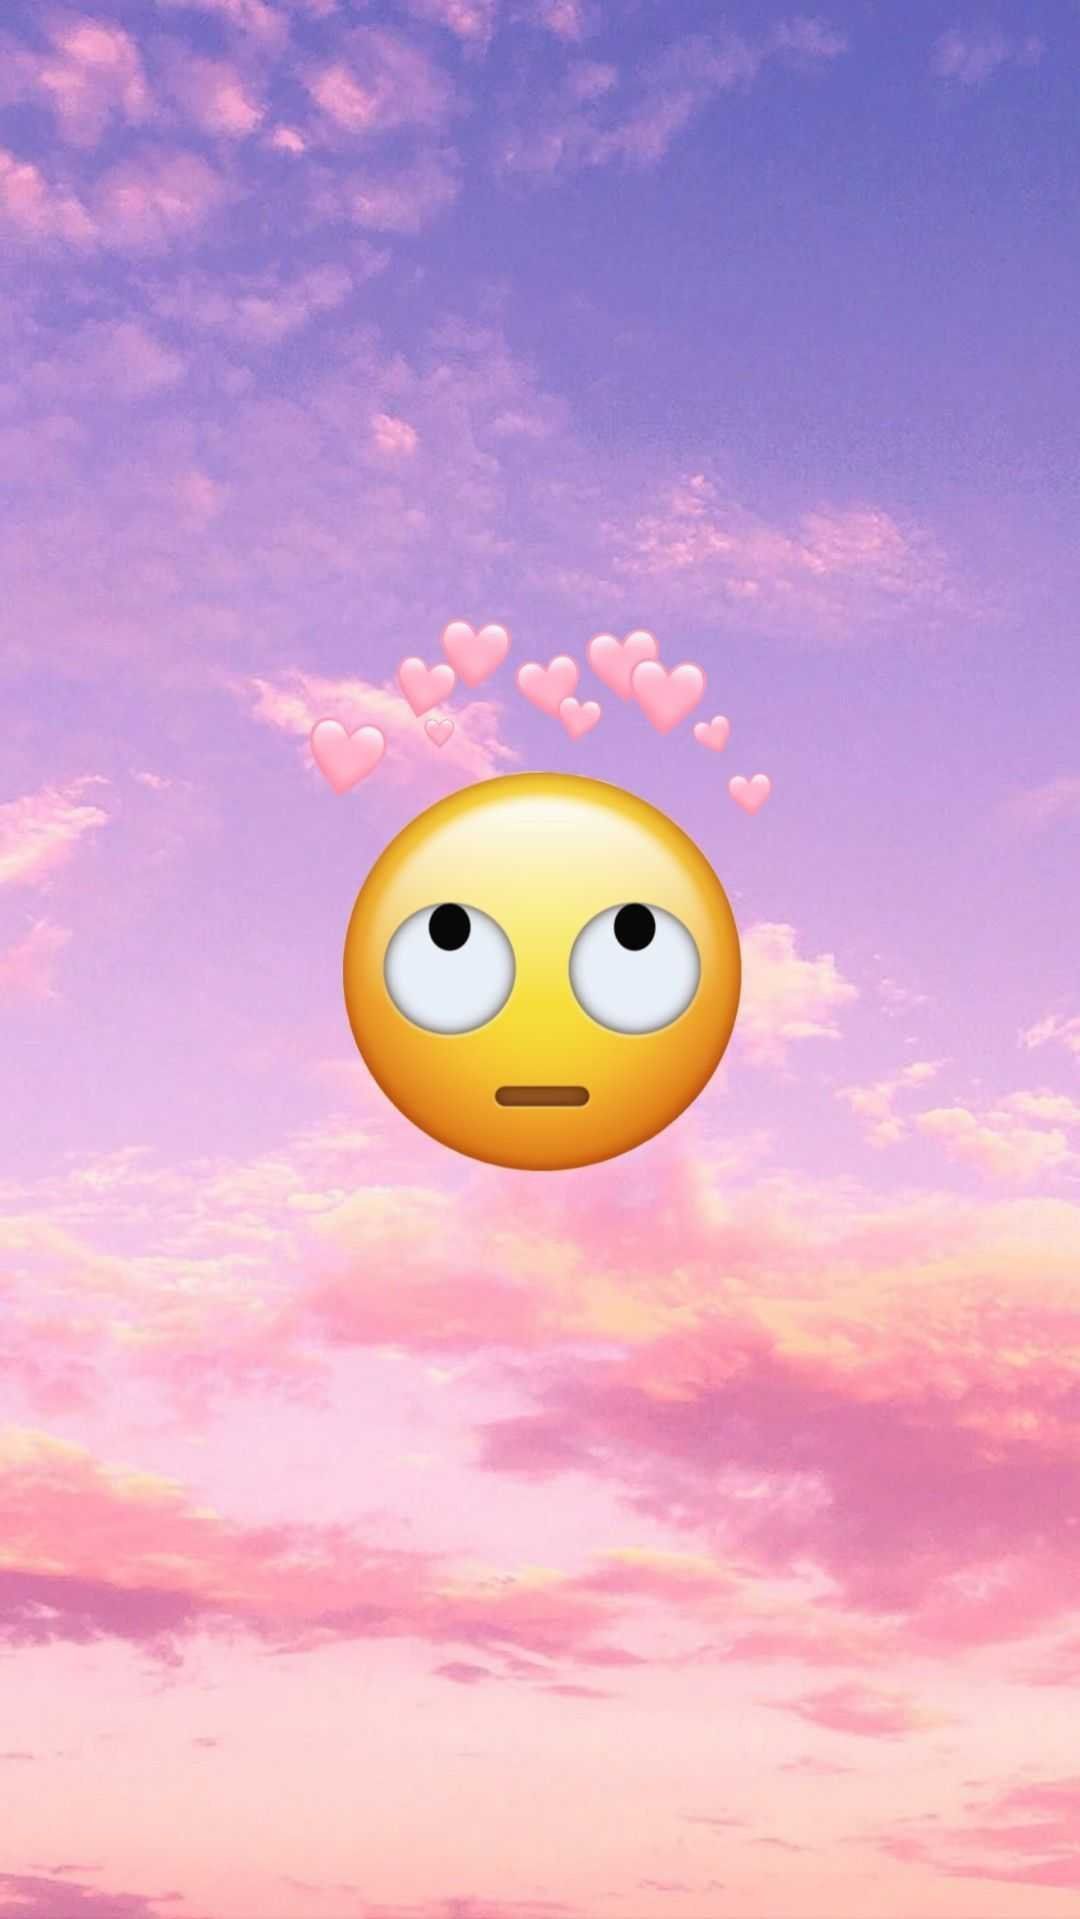 Aesthetic eye roll emoji Wallpaper Download